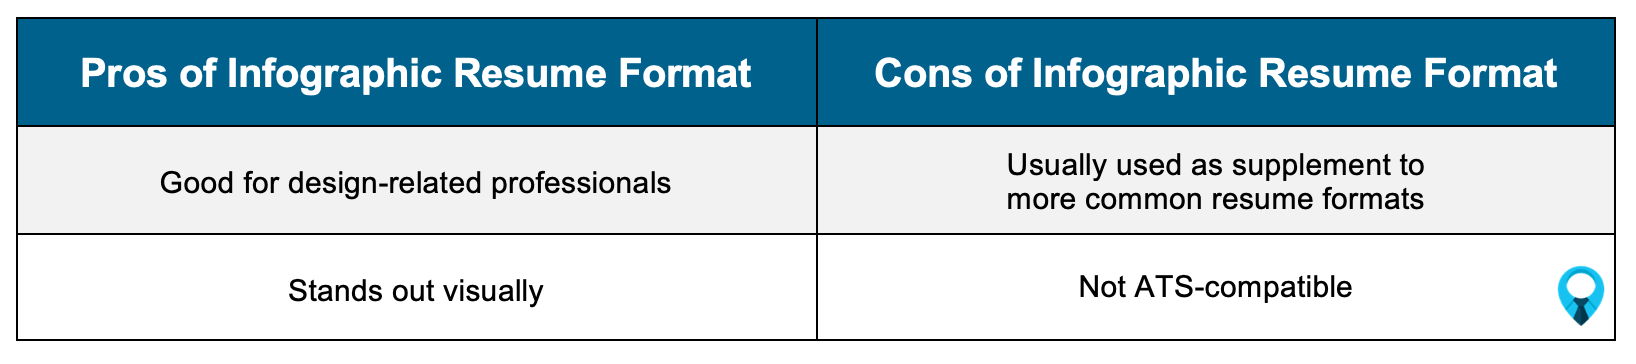 Infographic Resume Pros vs Cons